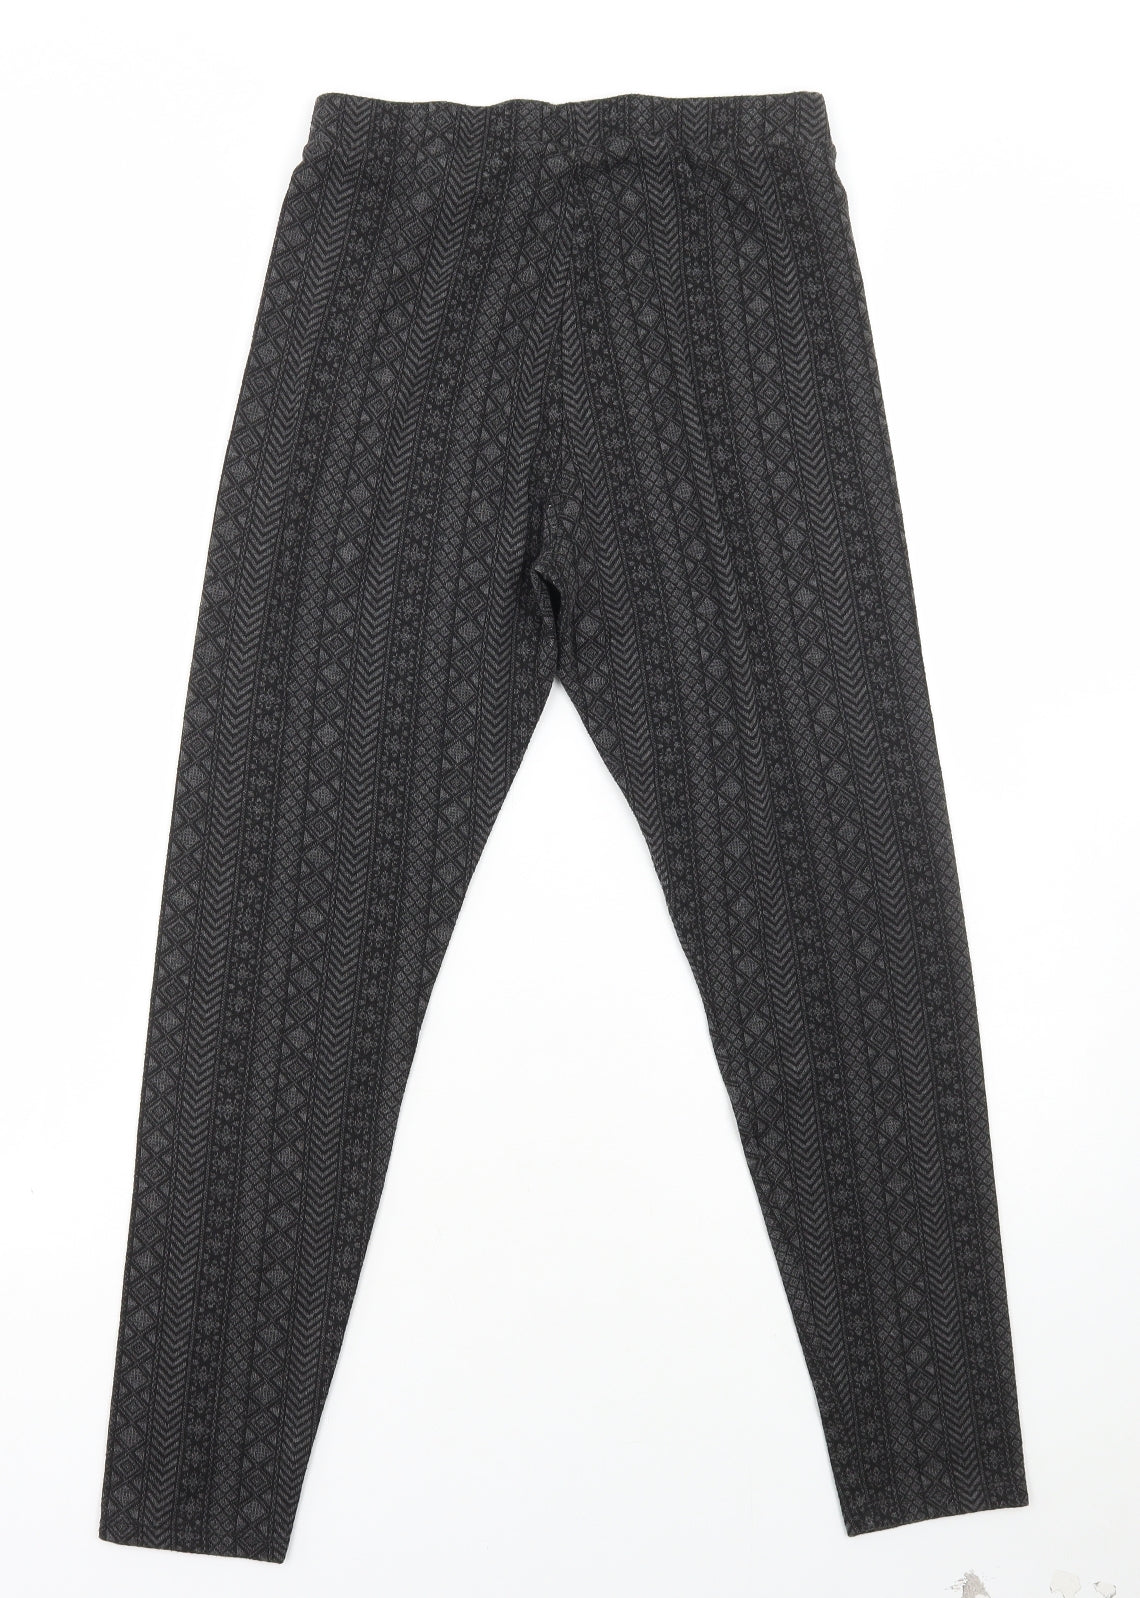 Marks and Spencer Womens Grey Geometric Polyester Capri Leggings Size 10 L26 in